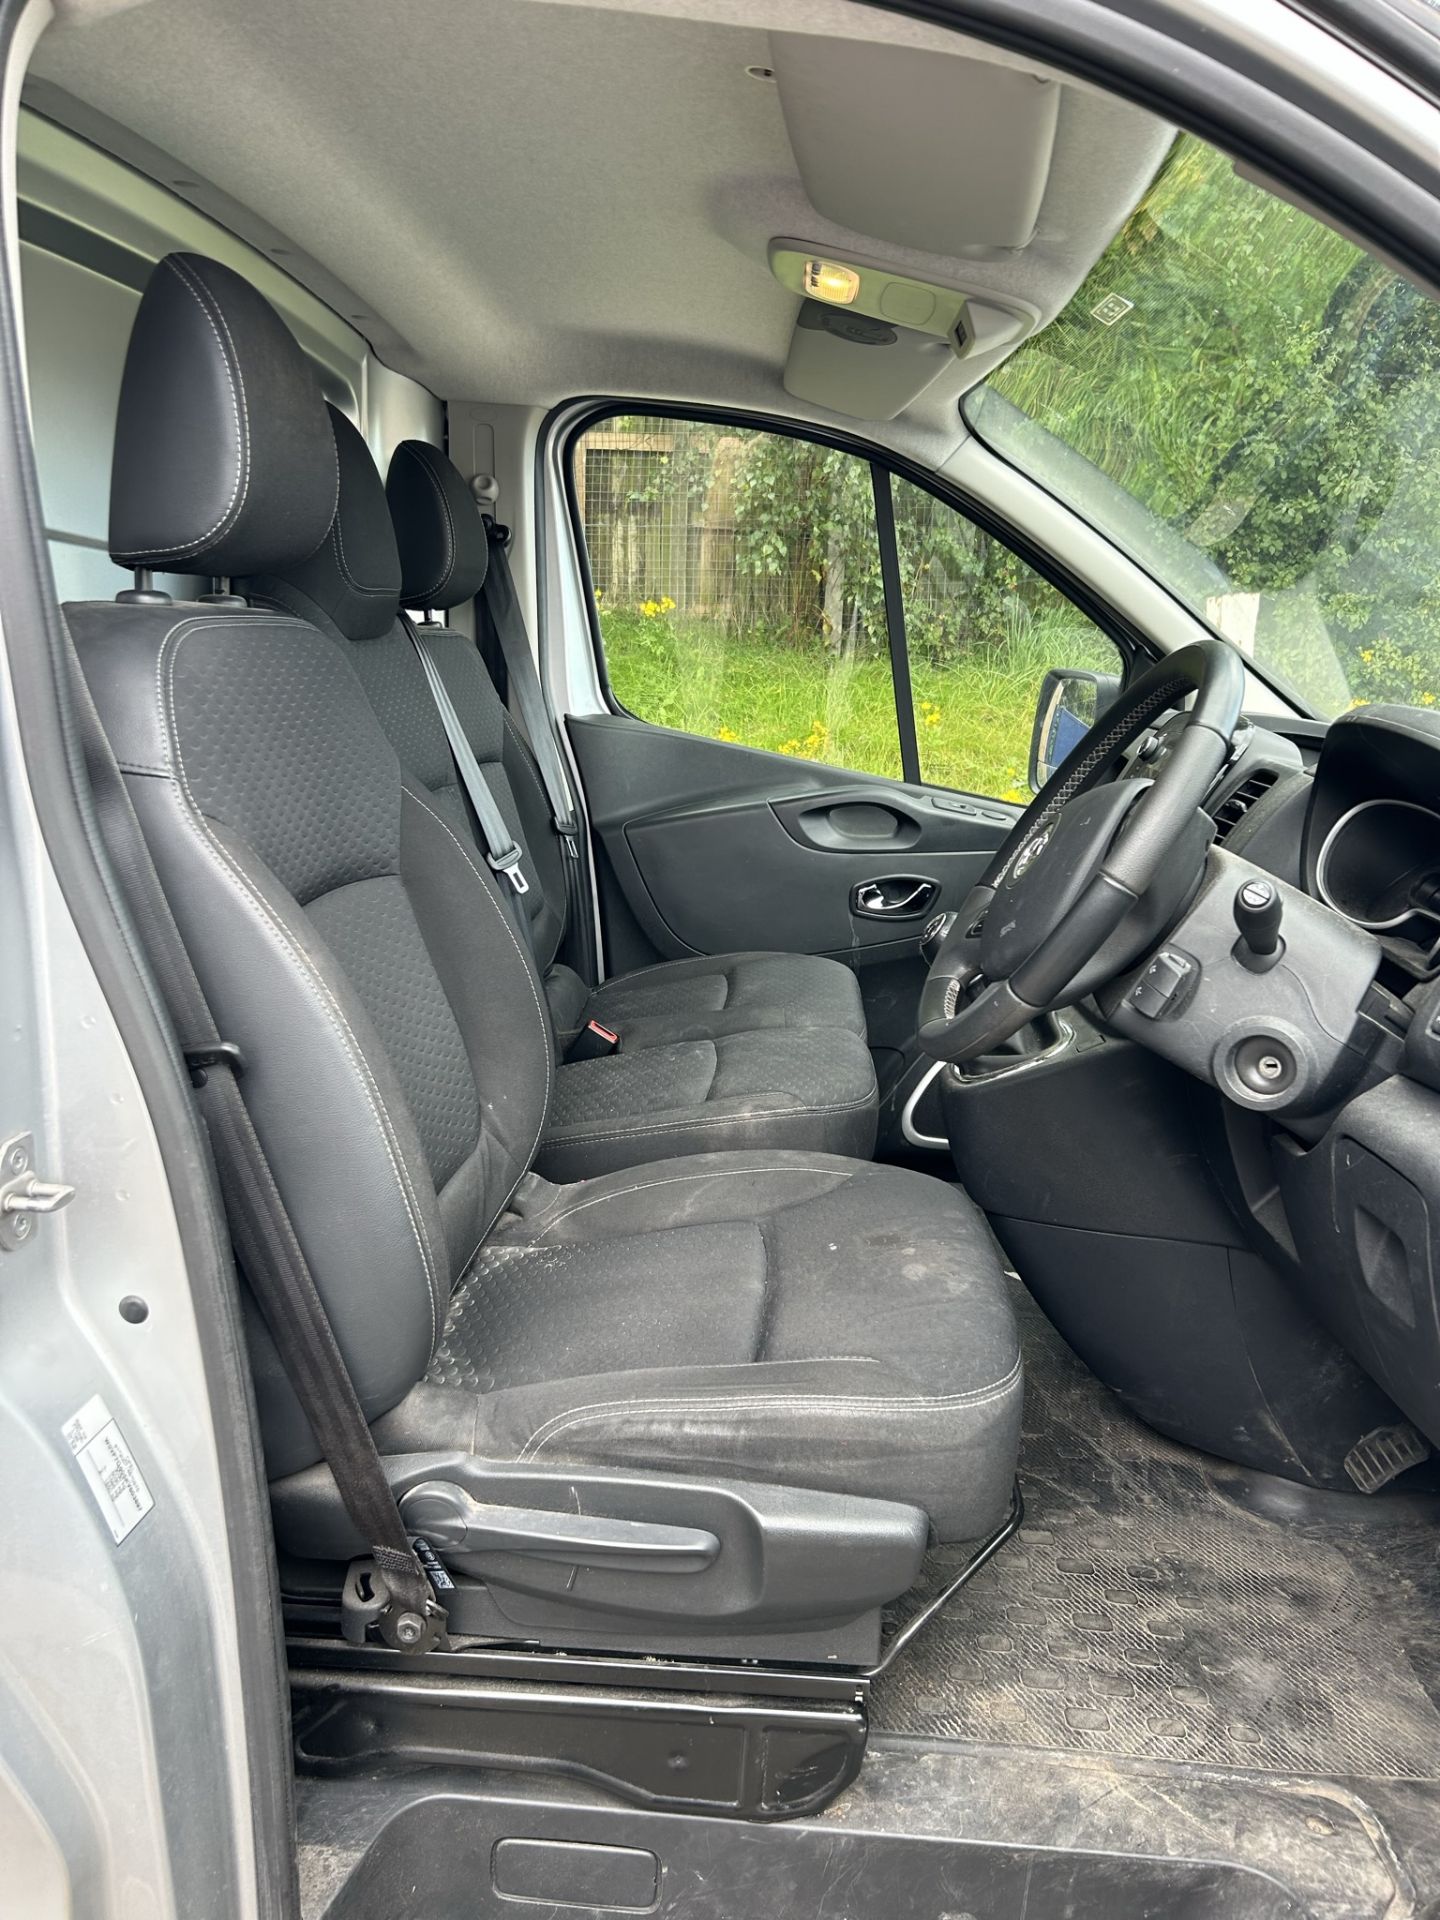 Vauxhall Vivaro 2900 Sportive CDTI Diesel Panel Van | SA68 REU | 31,726 Miles - Image 14 of 16